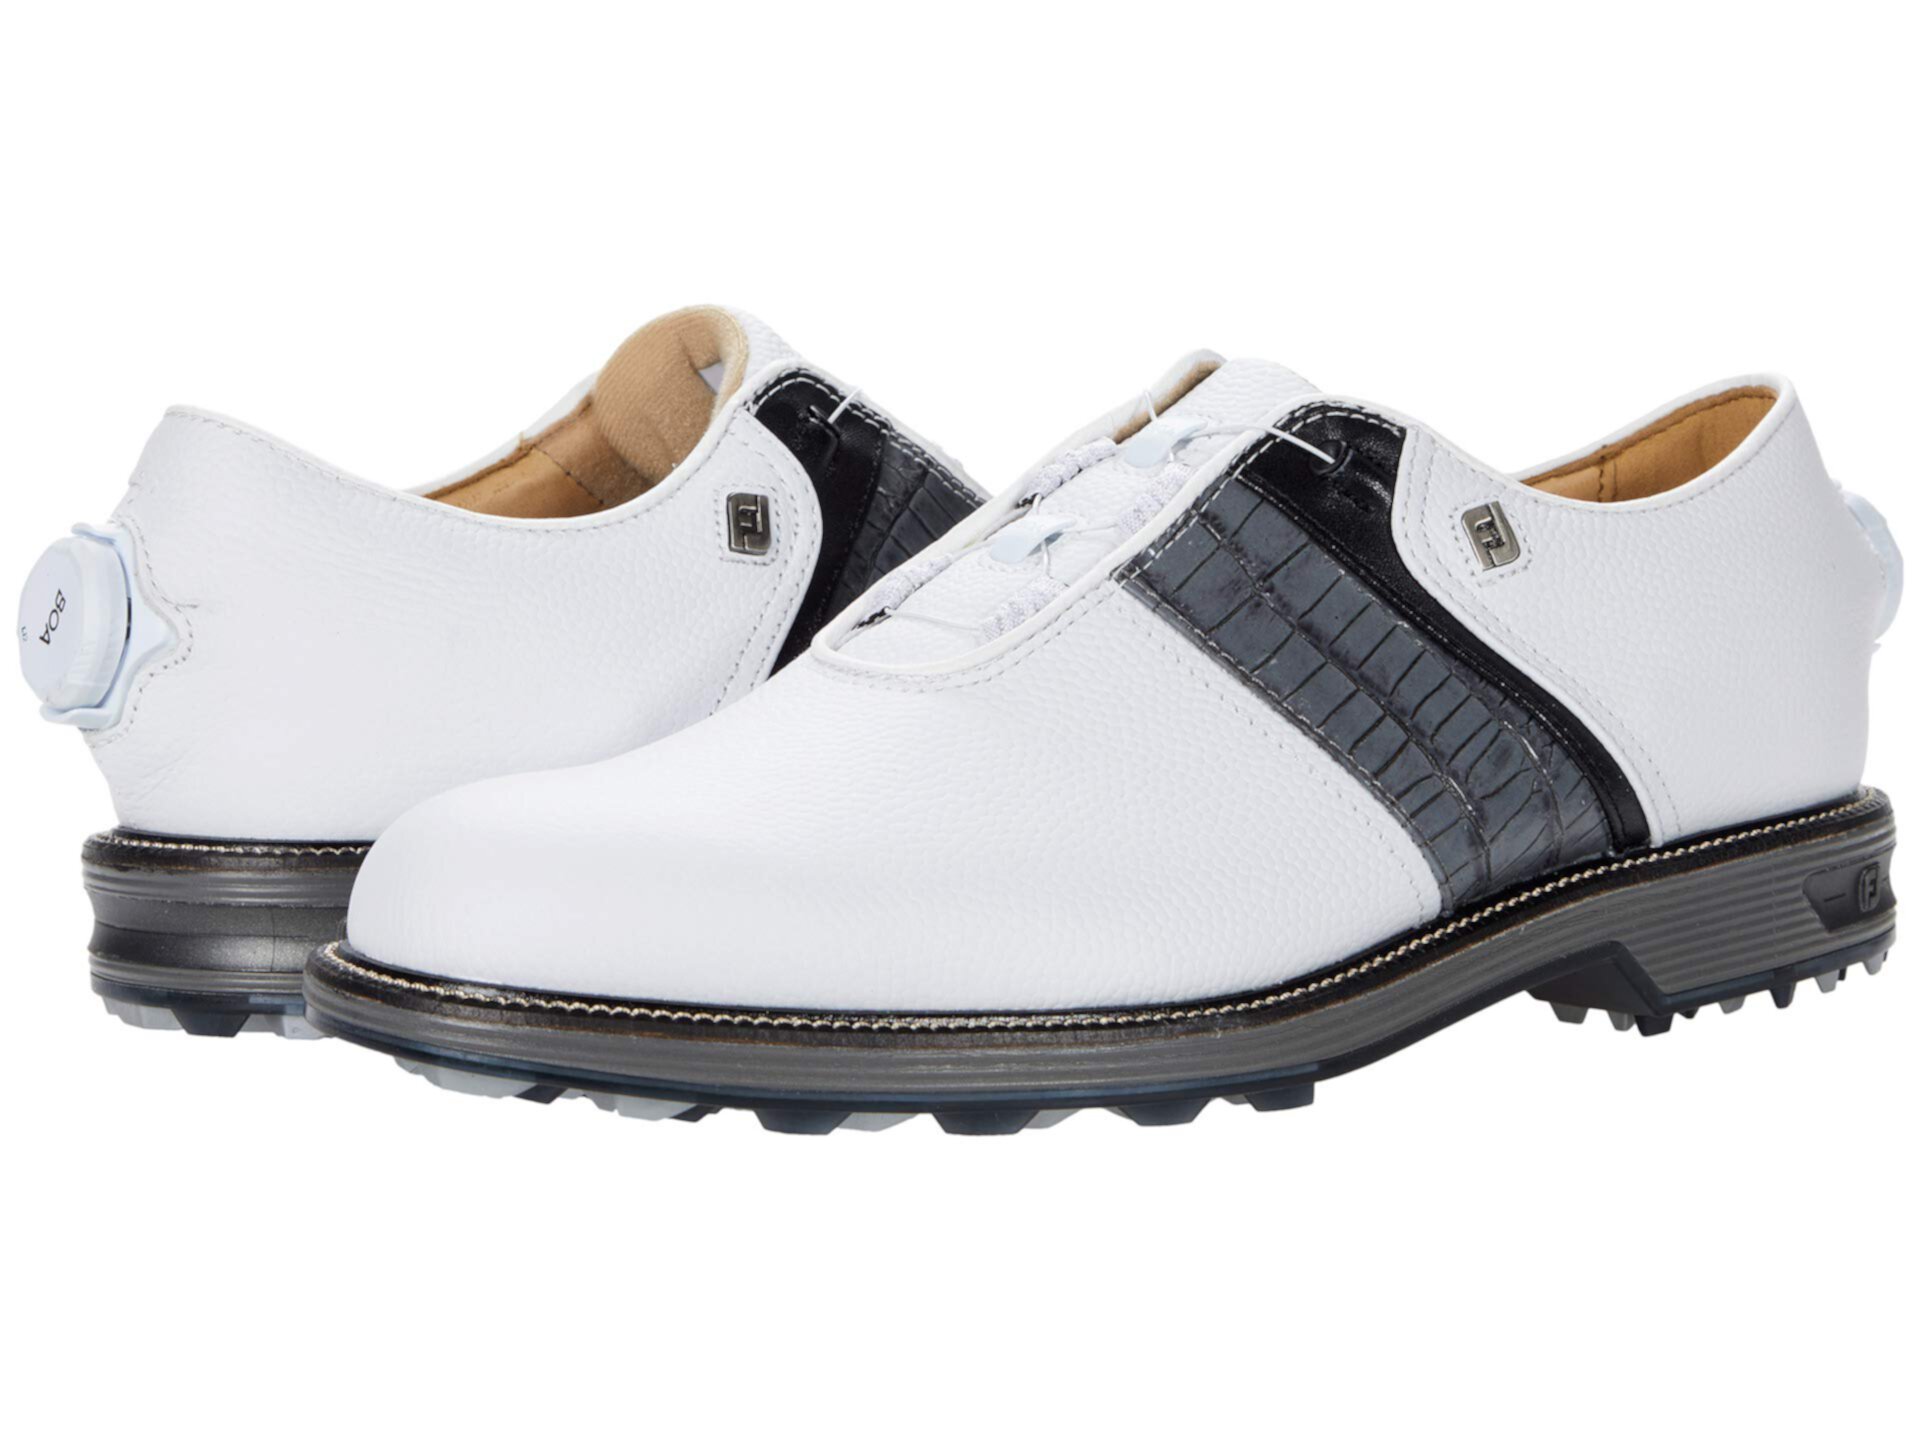 Premiere Series - Packard Boa Golf Shoes FootJoy